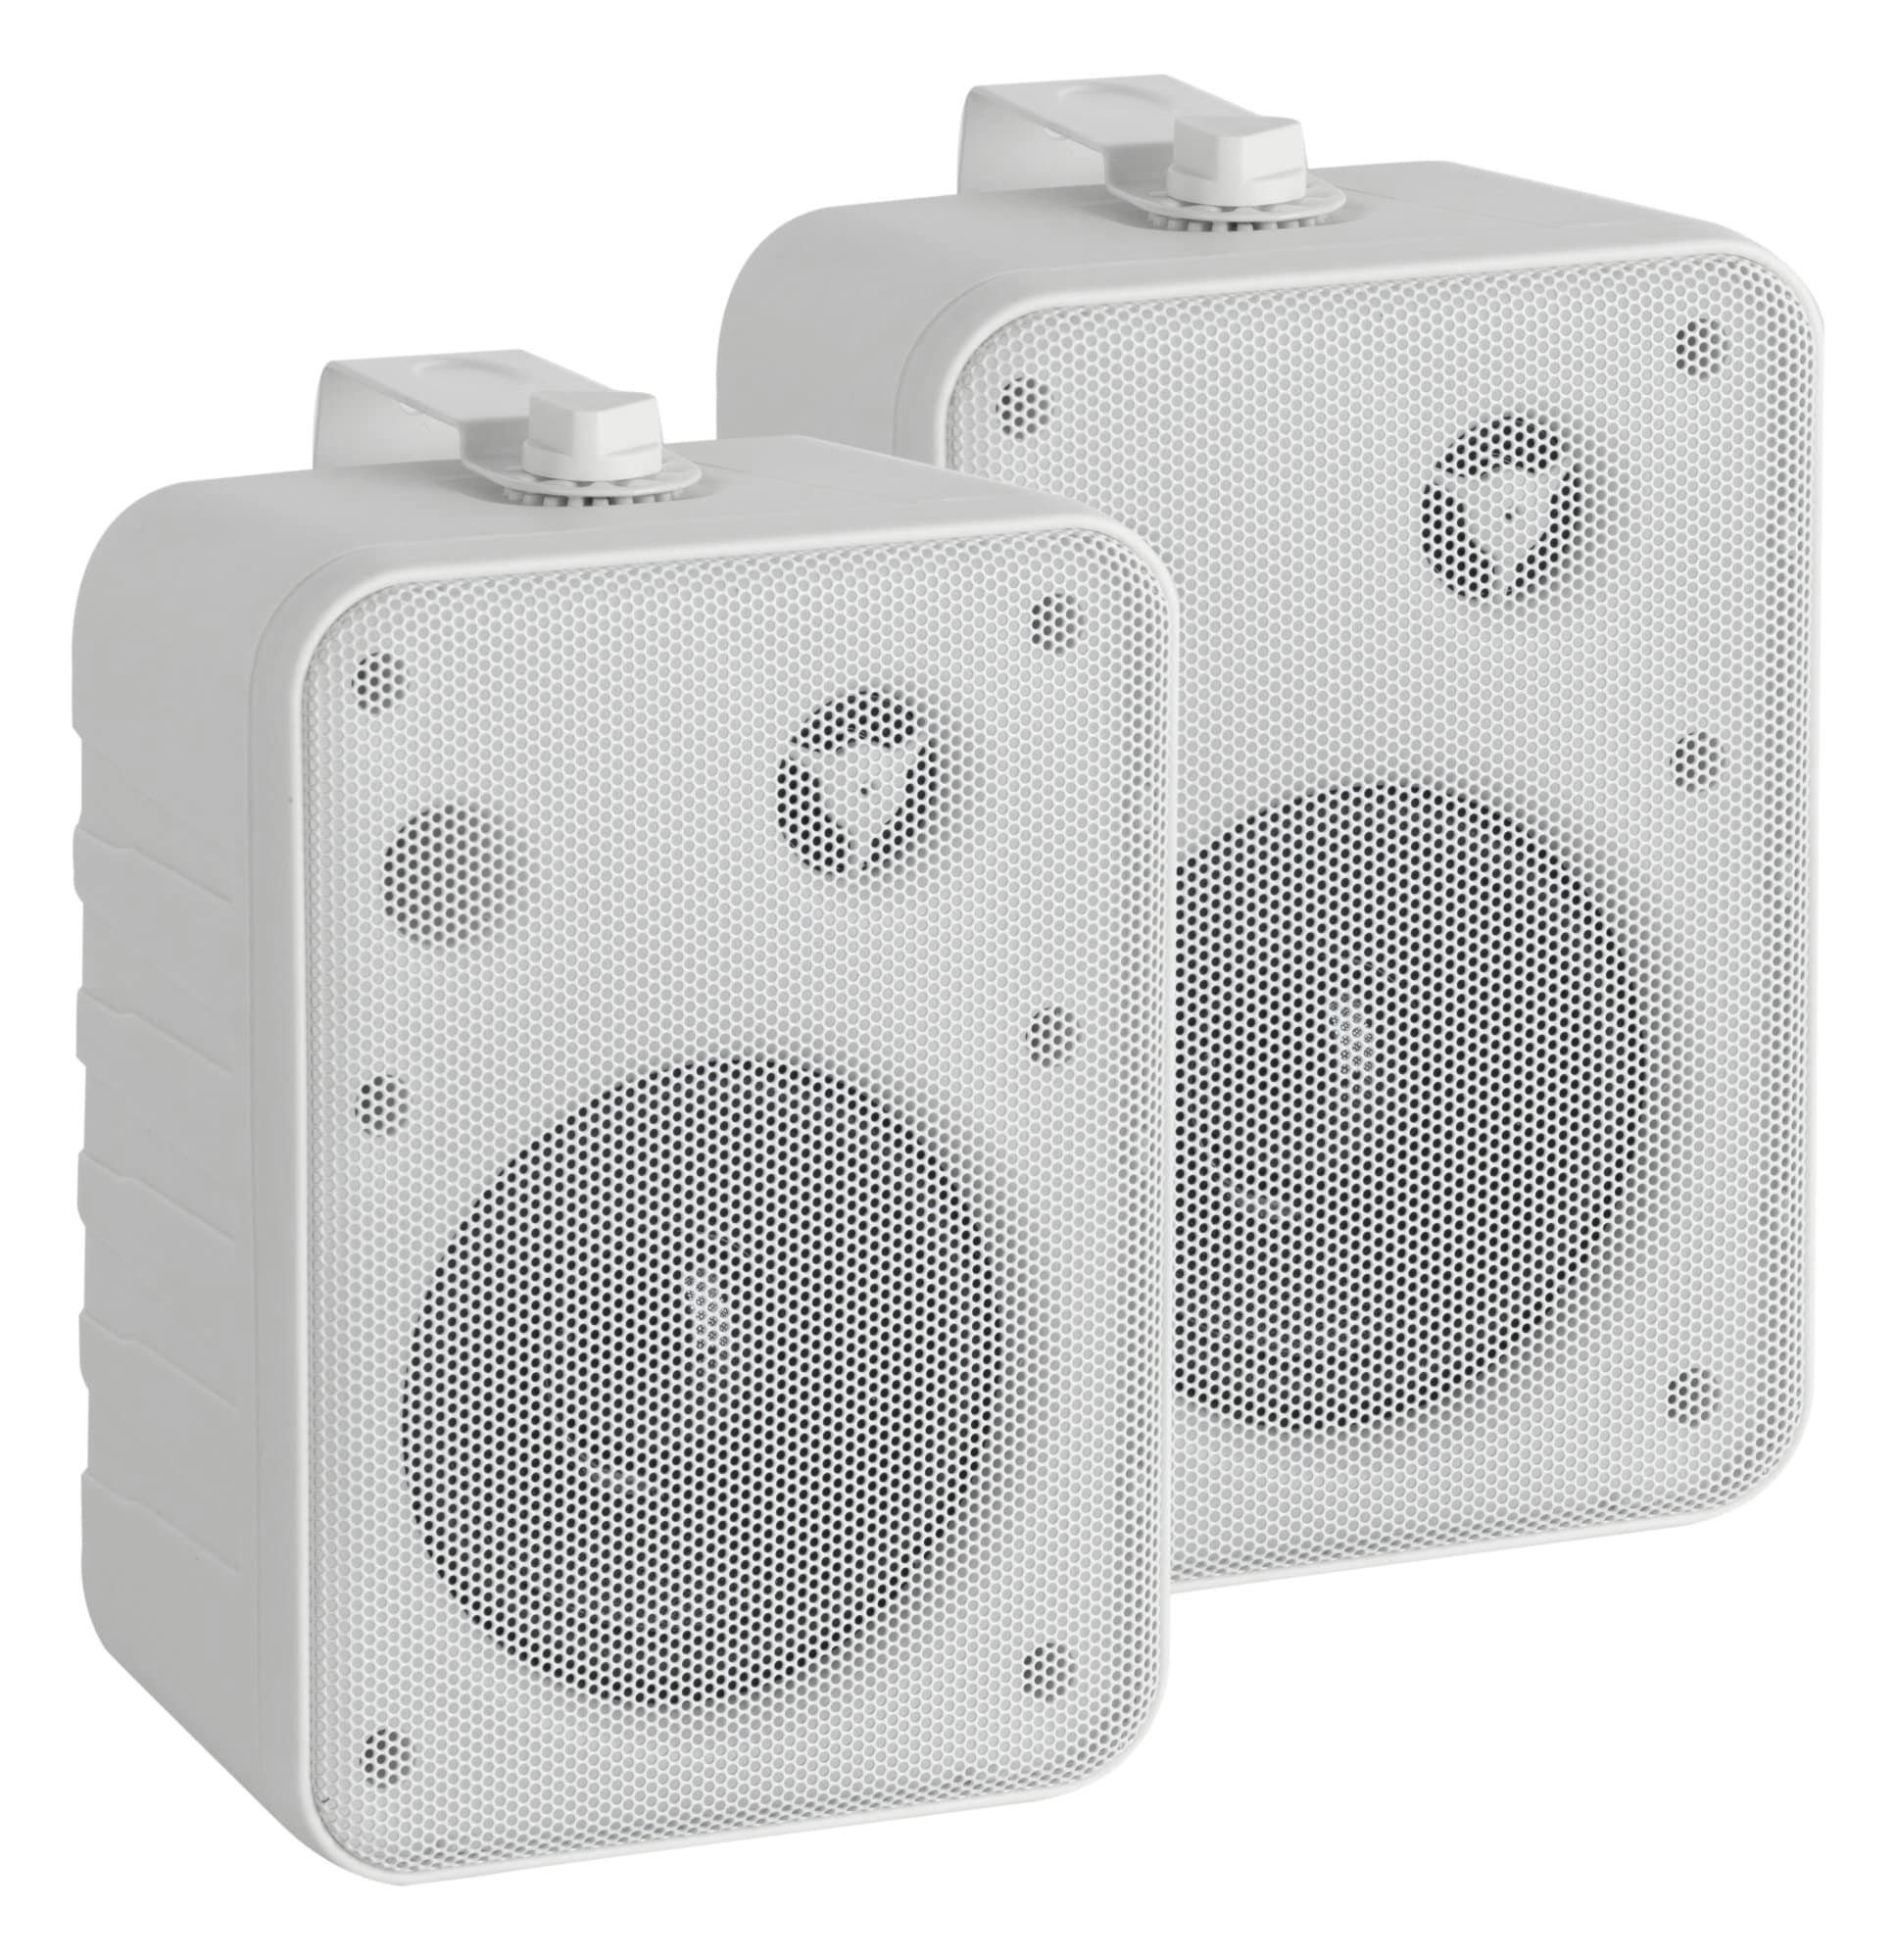 McGrey One Control MKIII HiFi-Lautsprecher - Lautsprecherboxen paar Lautsprecher (10 W, Boxen für Installation, Studio oder HiFi-Anwendung) Weiß